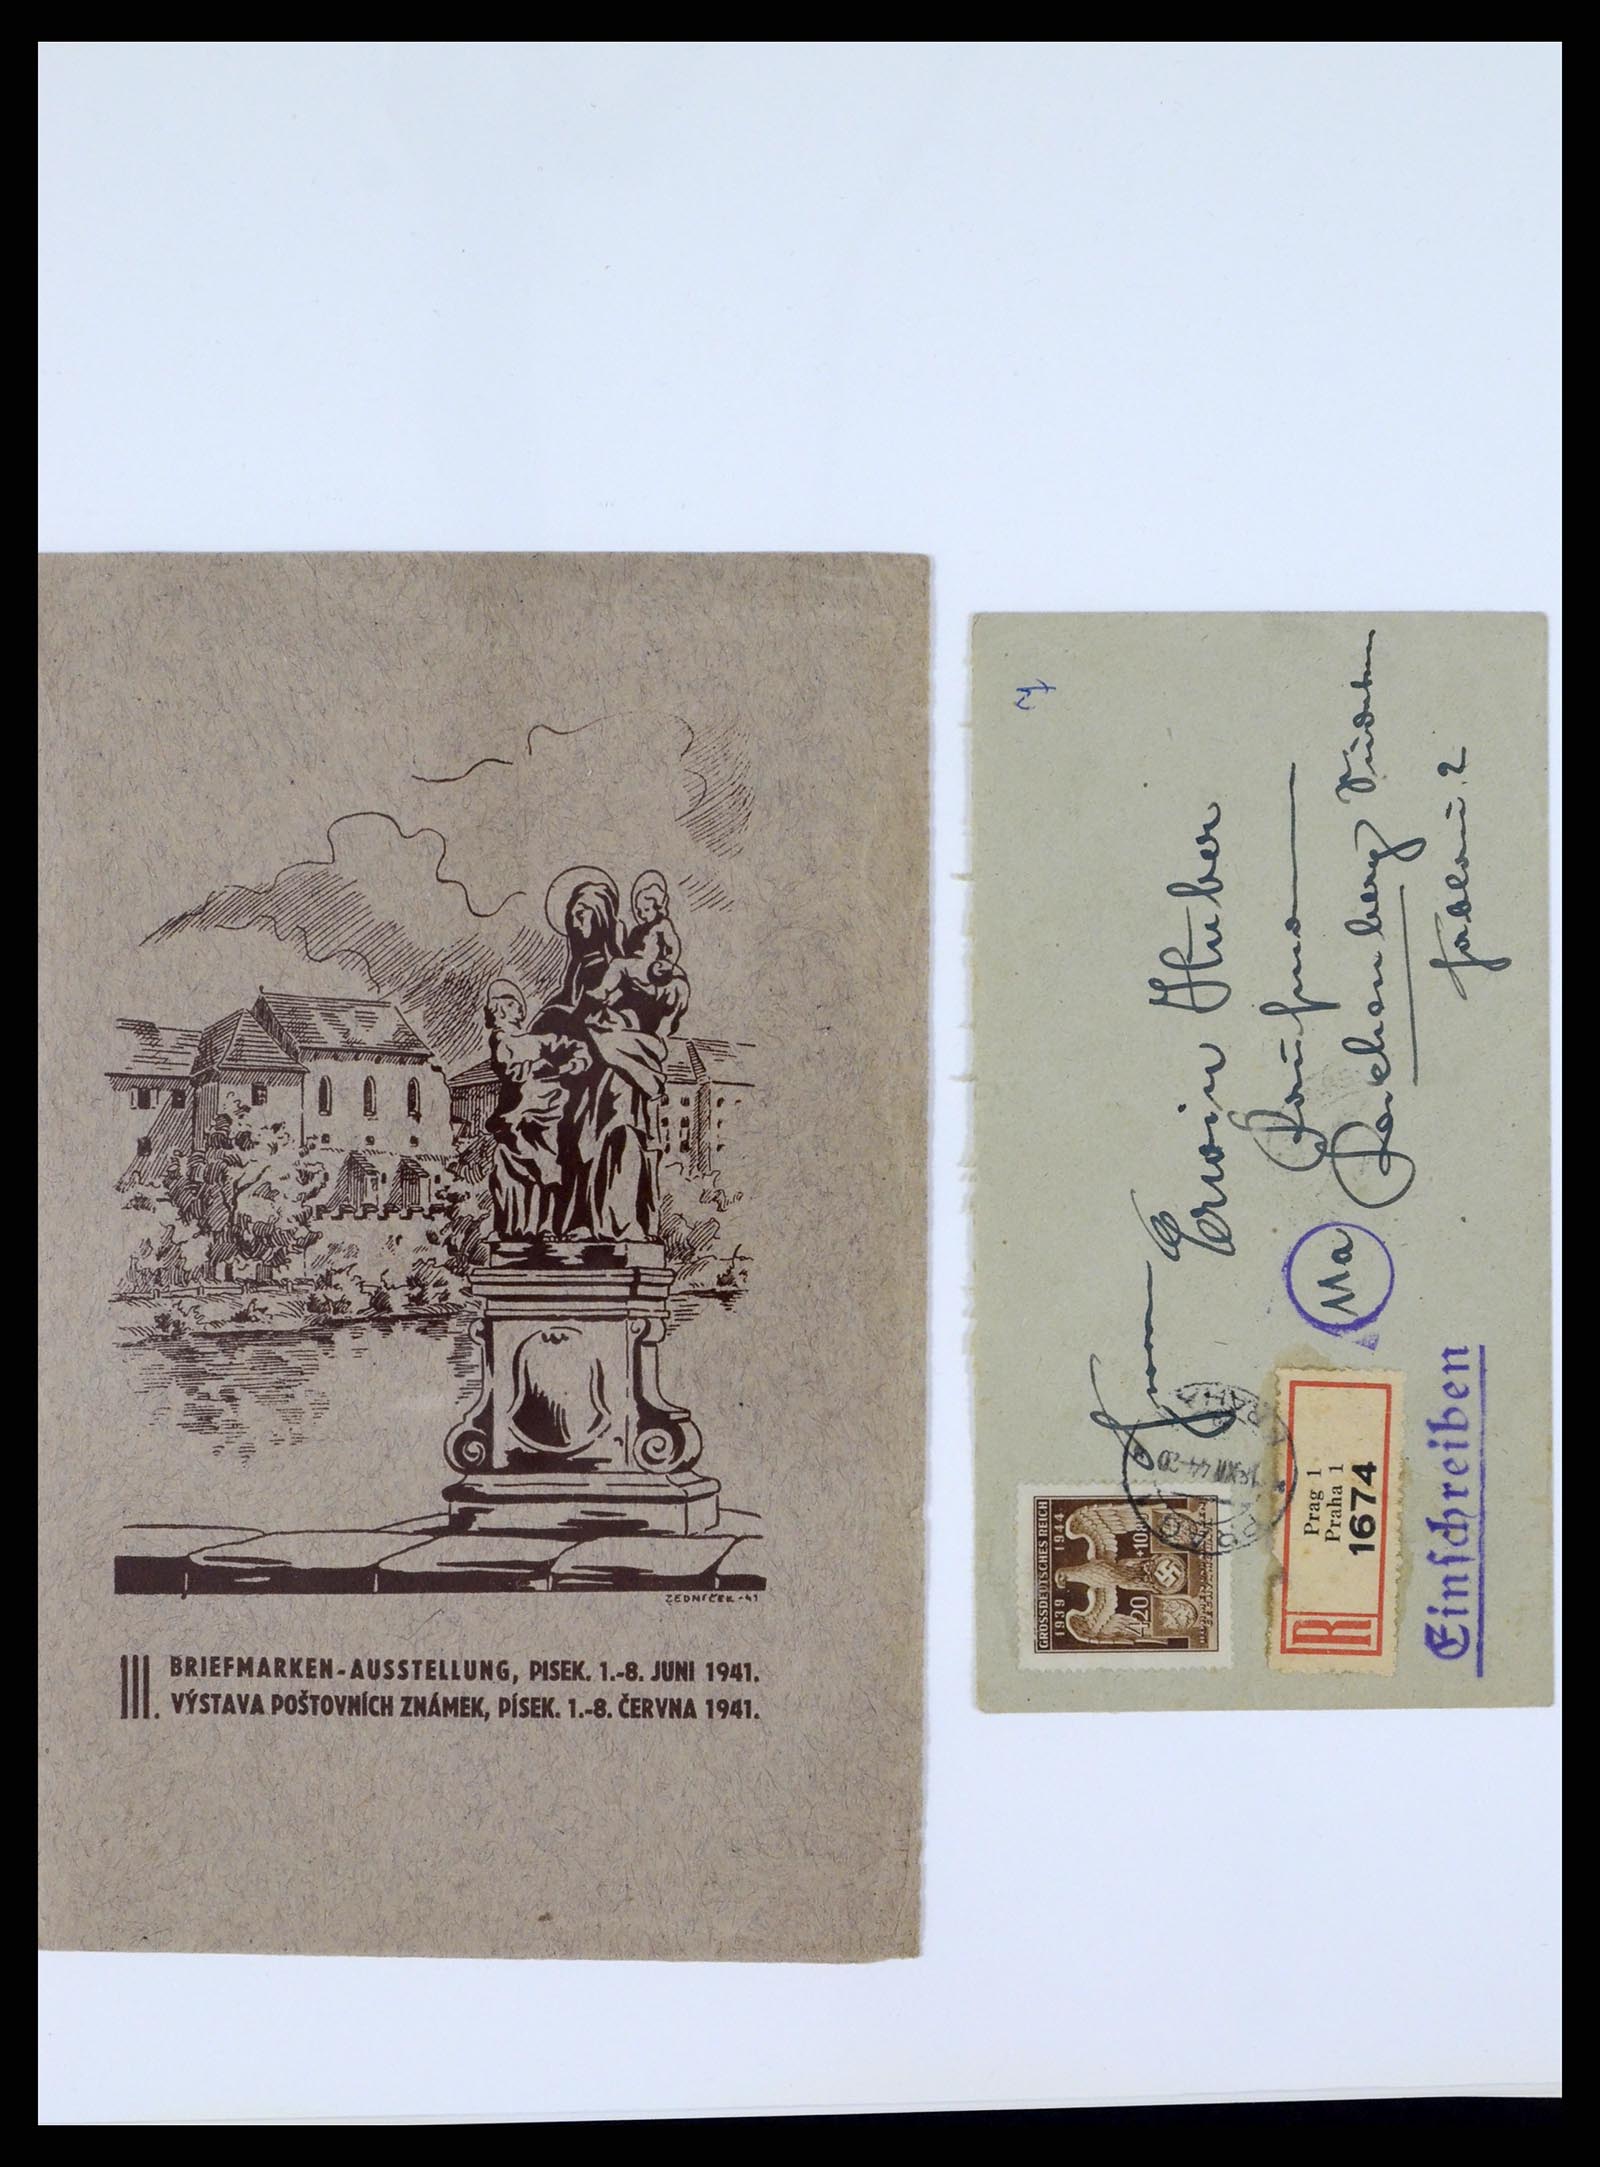 37535 040 - Stamp collection 37535 German occupation second worldwar 1939-1945.